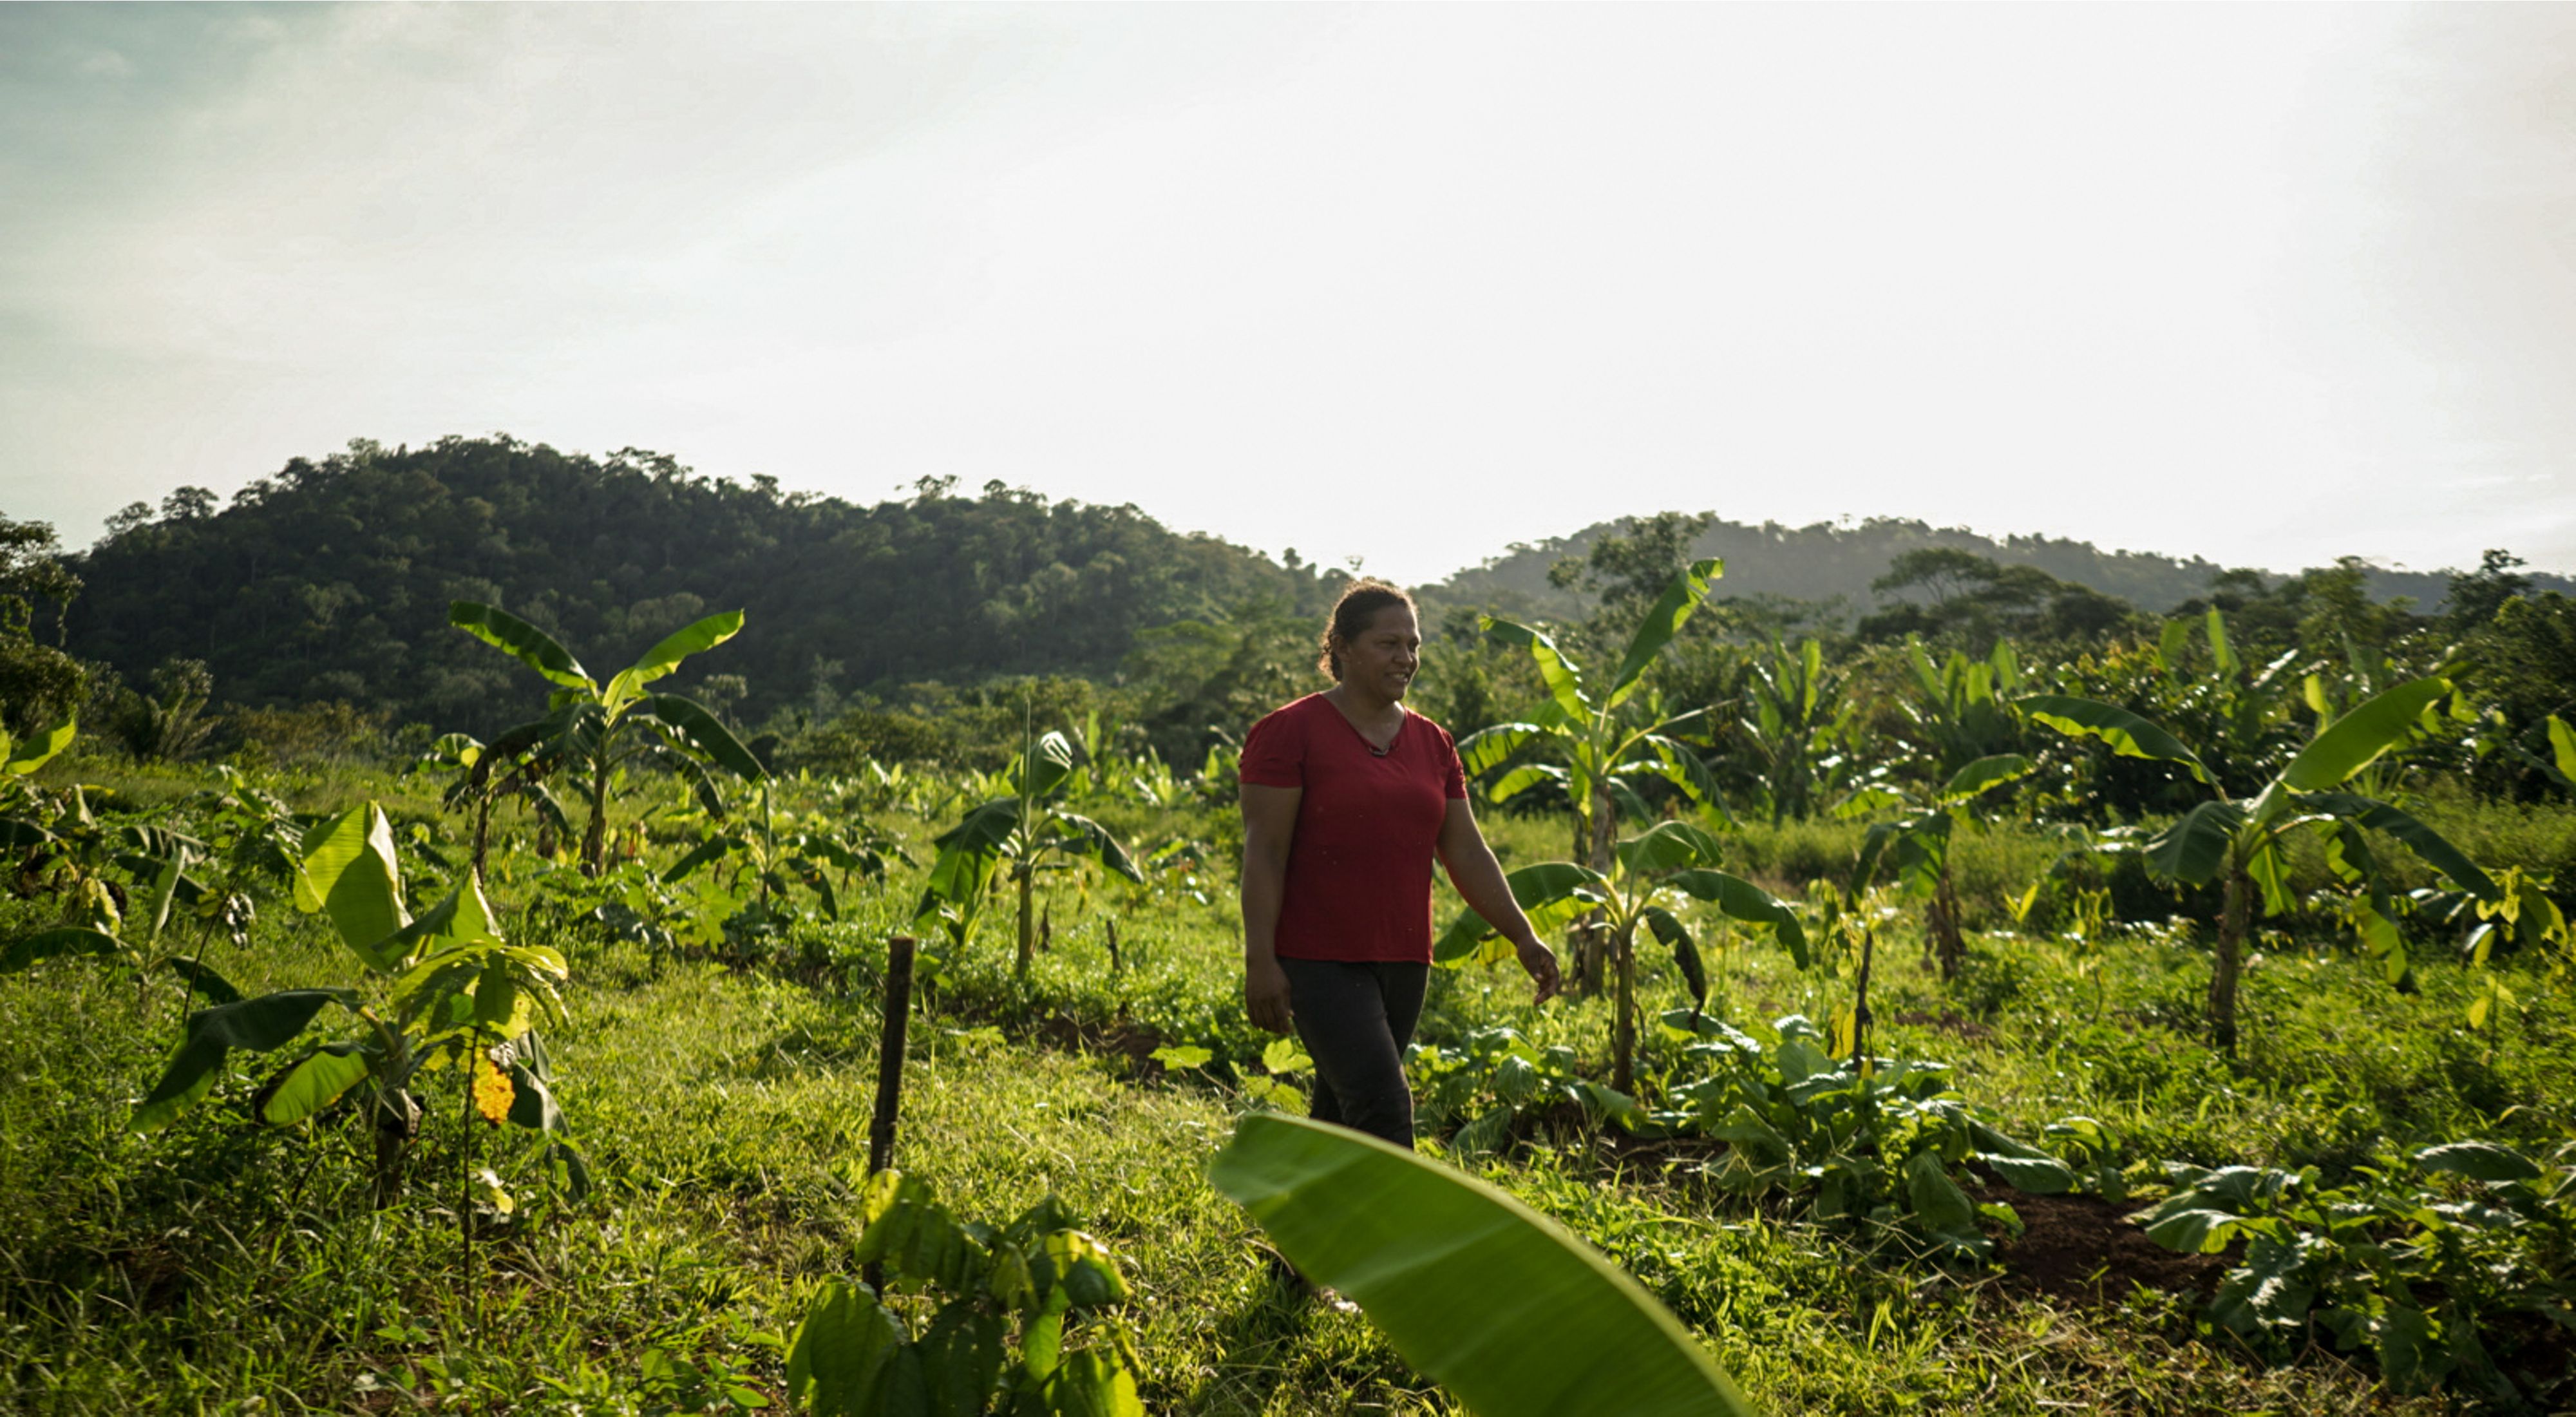 rural producer walking through agroforestry system.